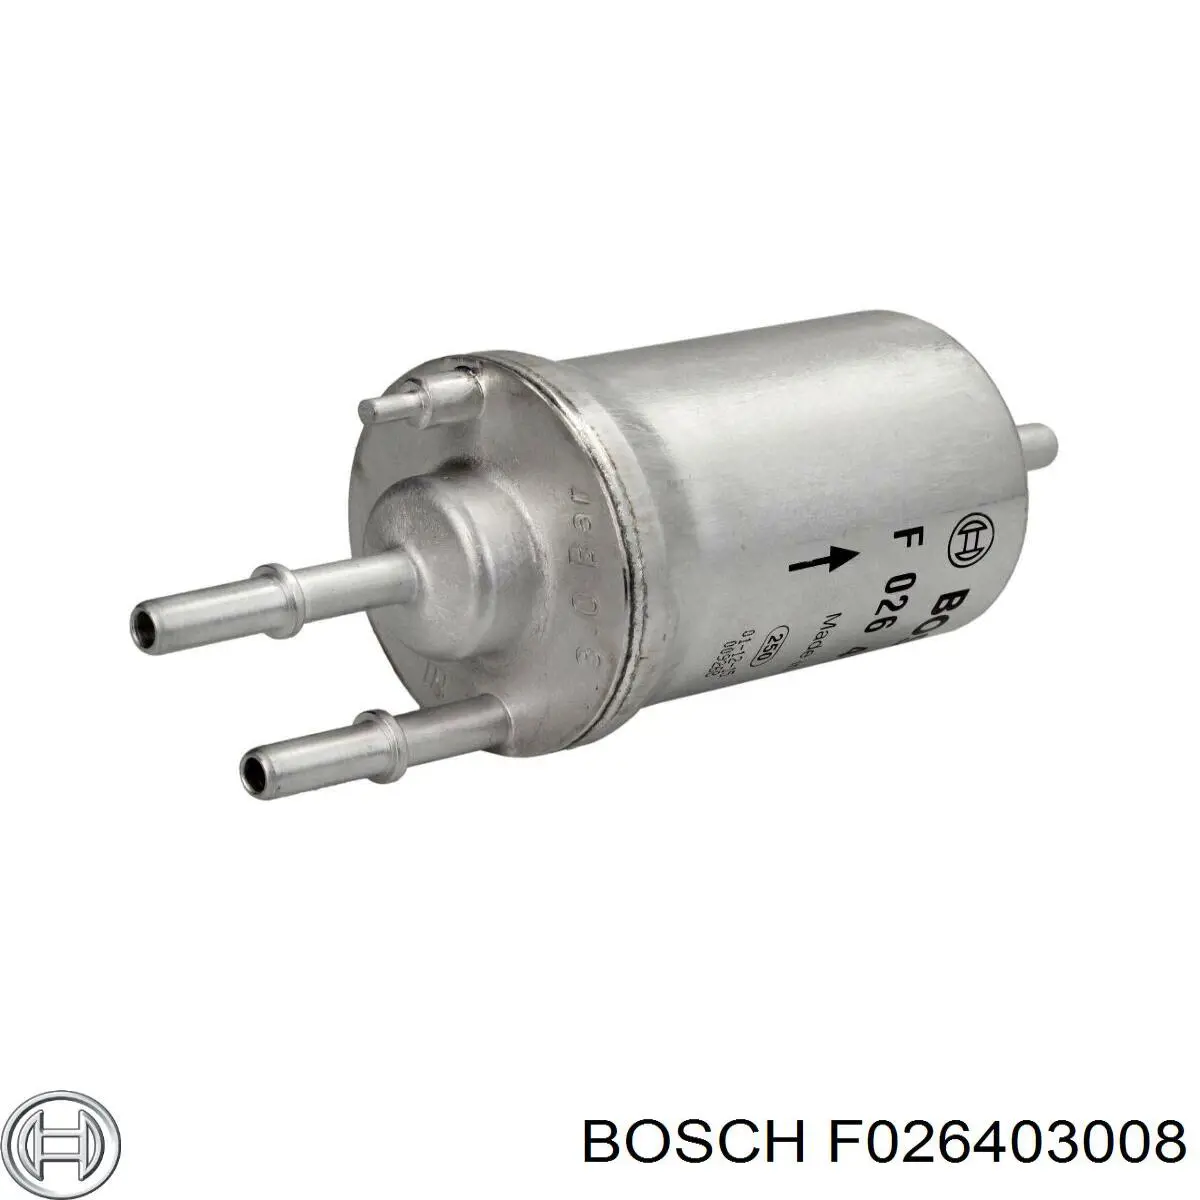 F026403008 Bosch filtro combustible